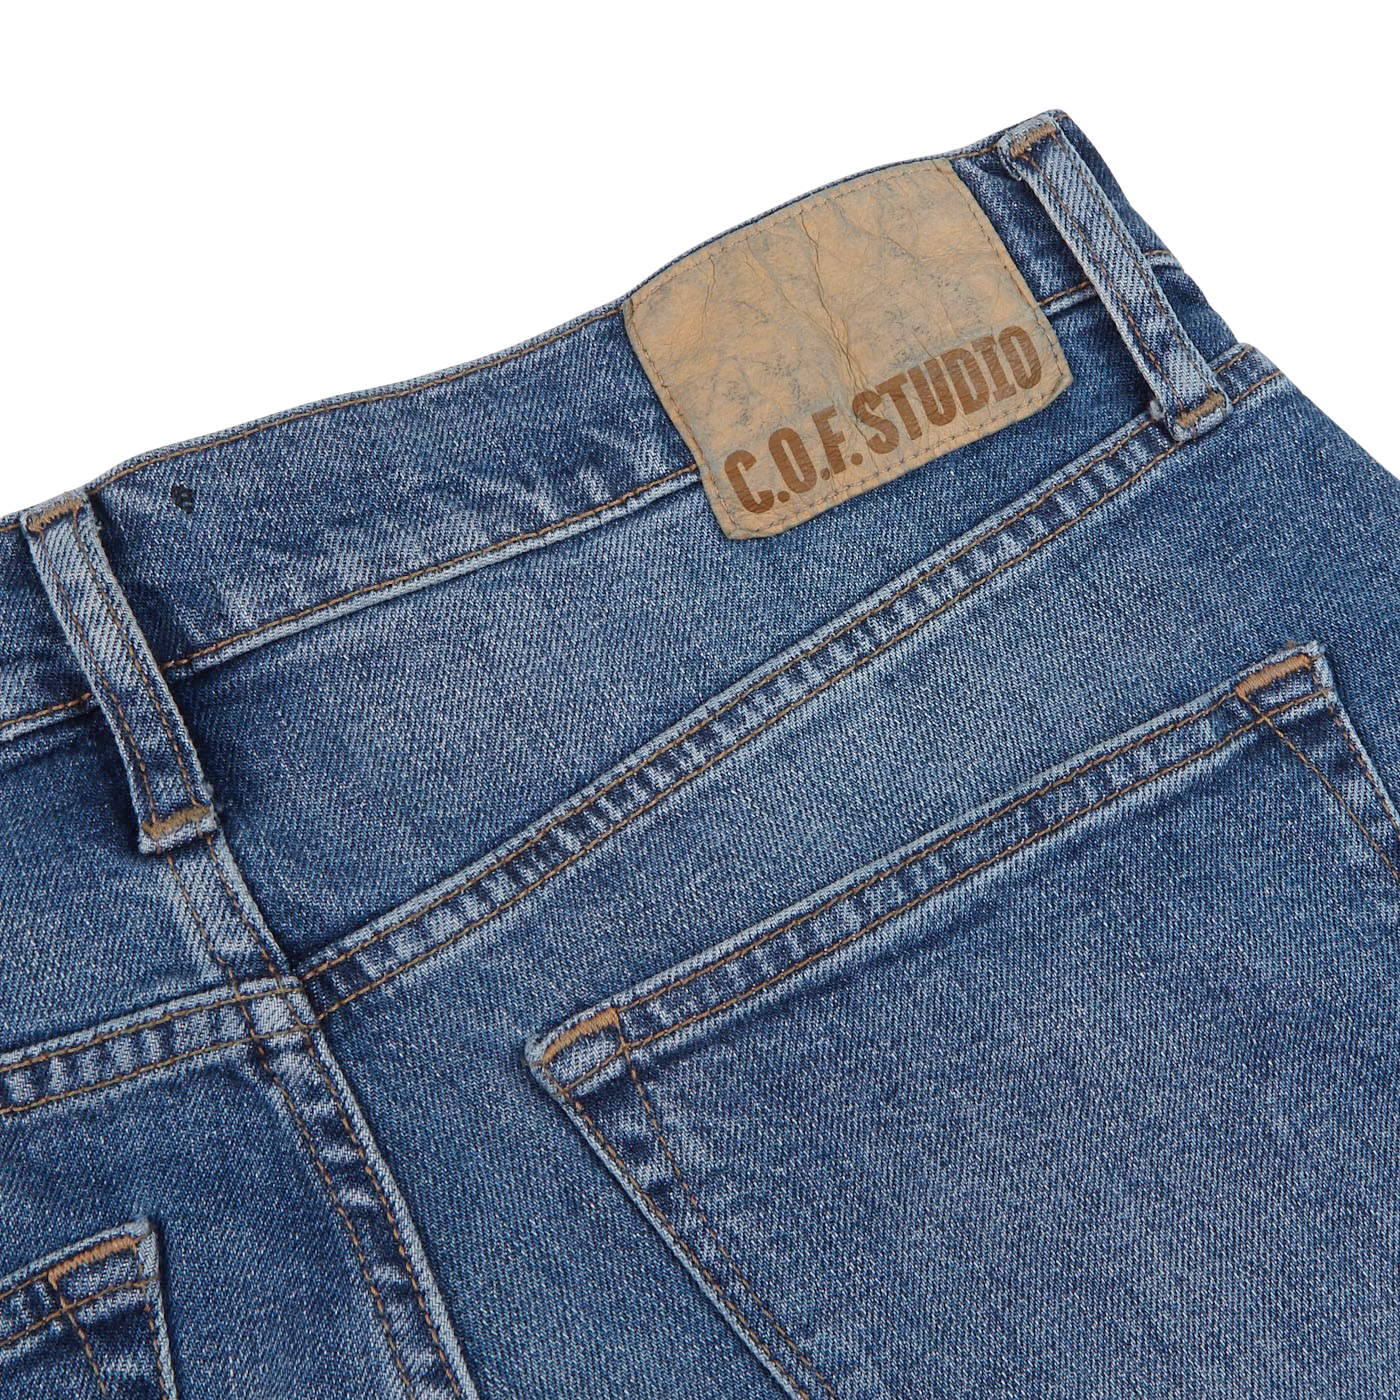 C.O.F Studio Mid Blue Organic Candiani Cotton M7 Jeans Pocket